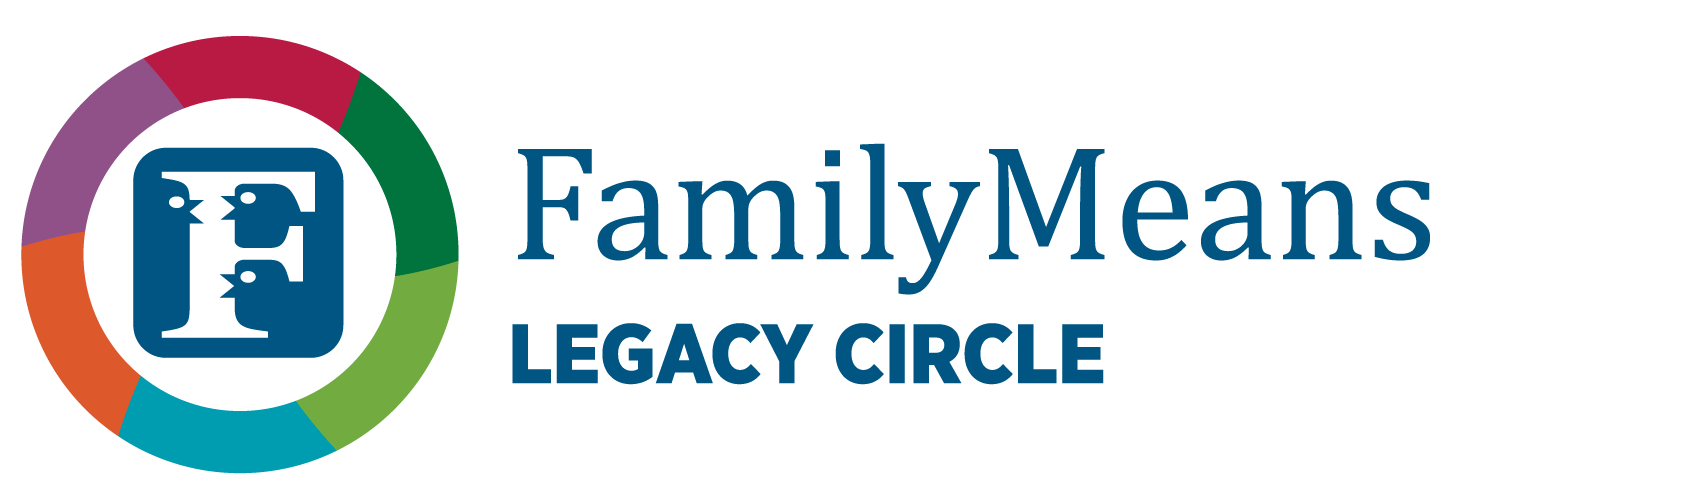 FamilyMeans Legacy Circle Logo